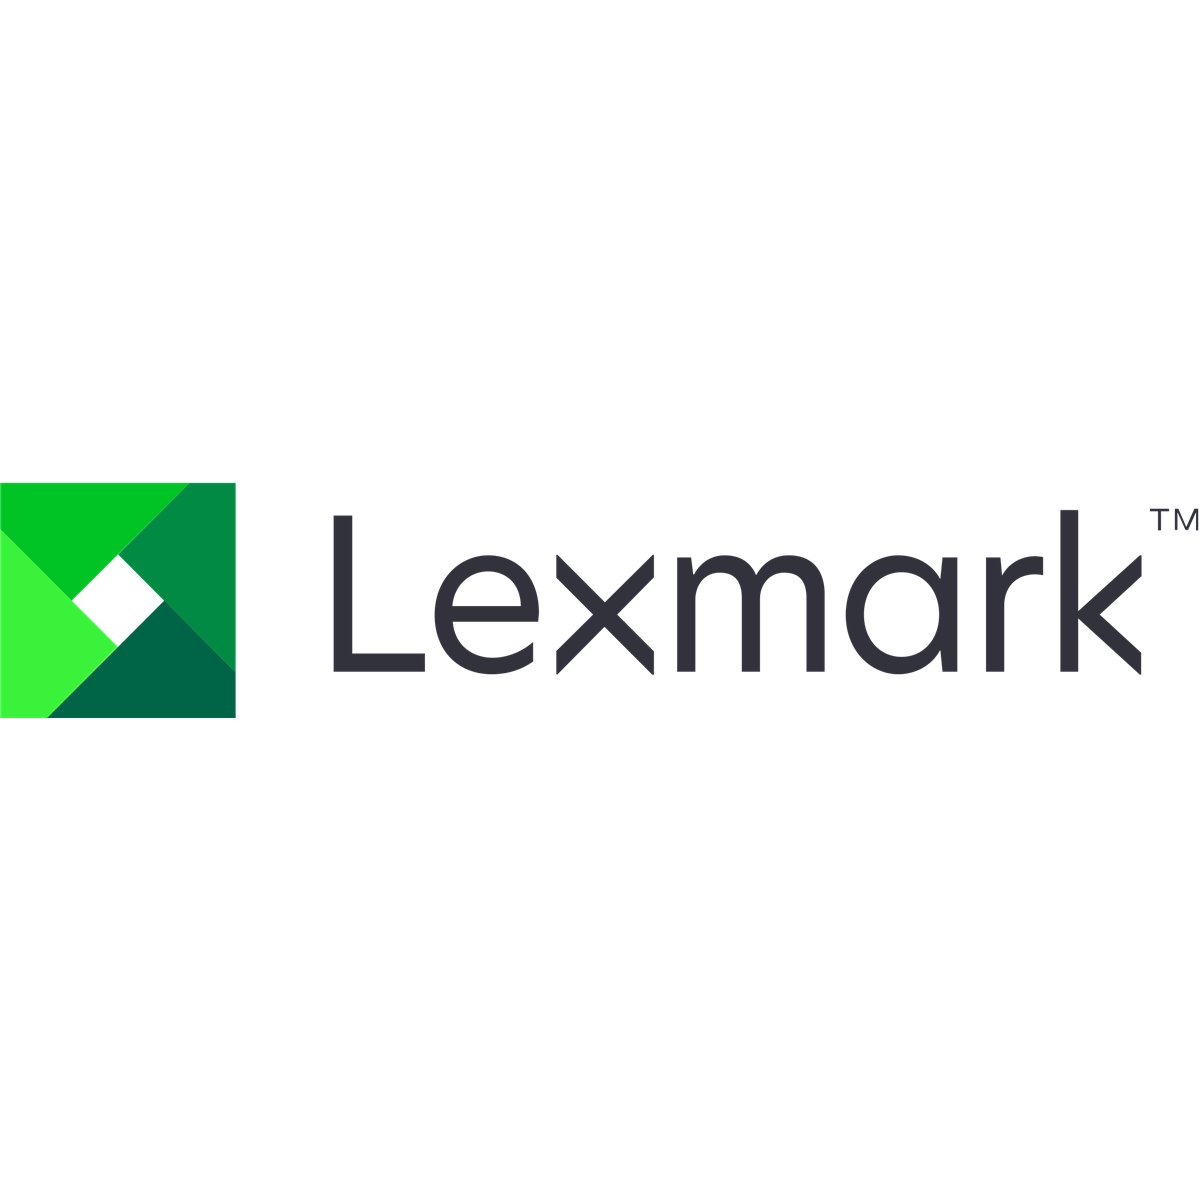 Lexmark PCBA Operator panel user